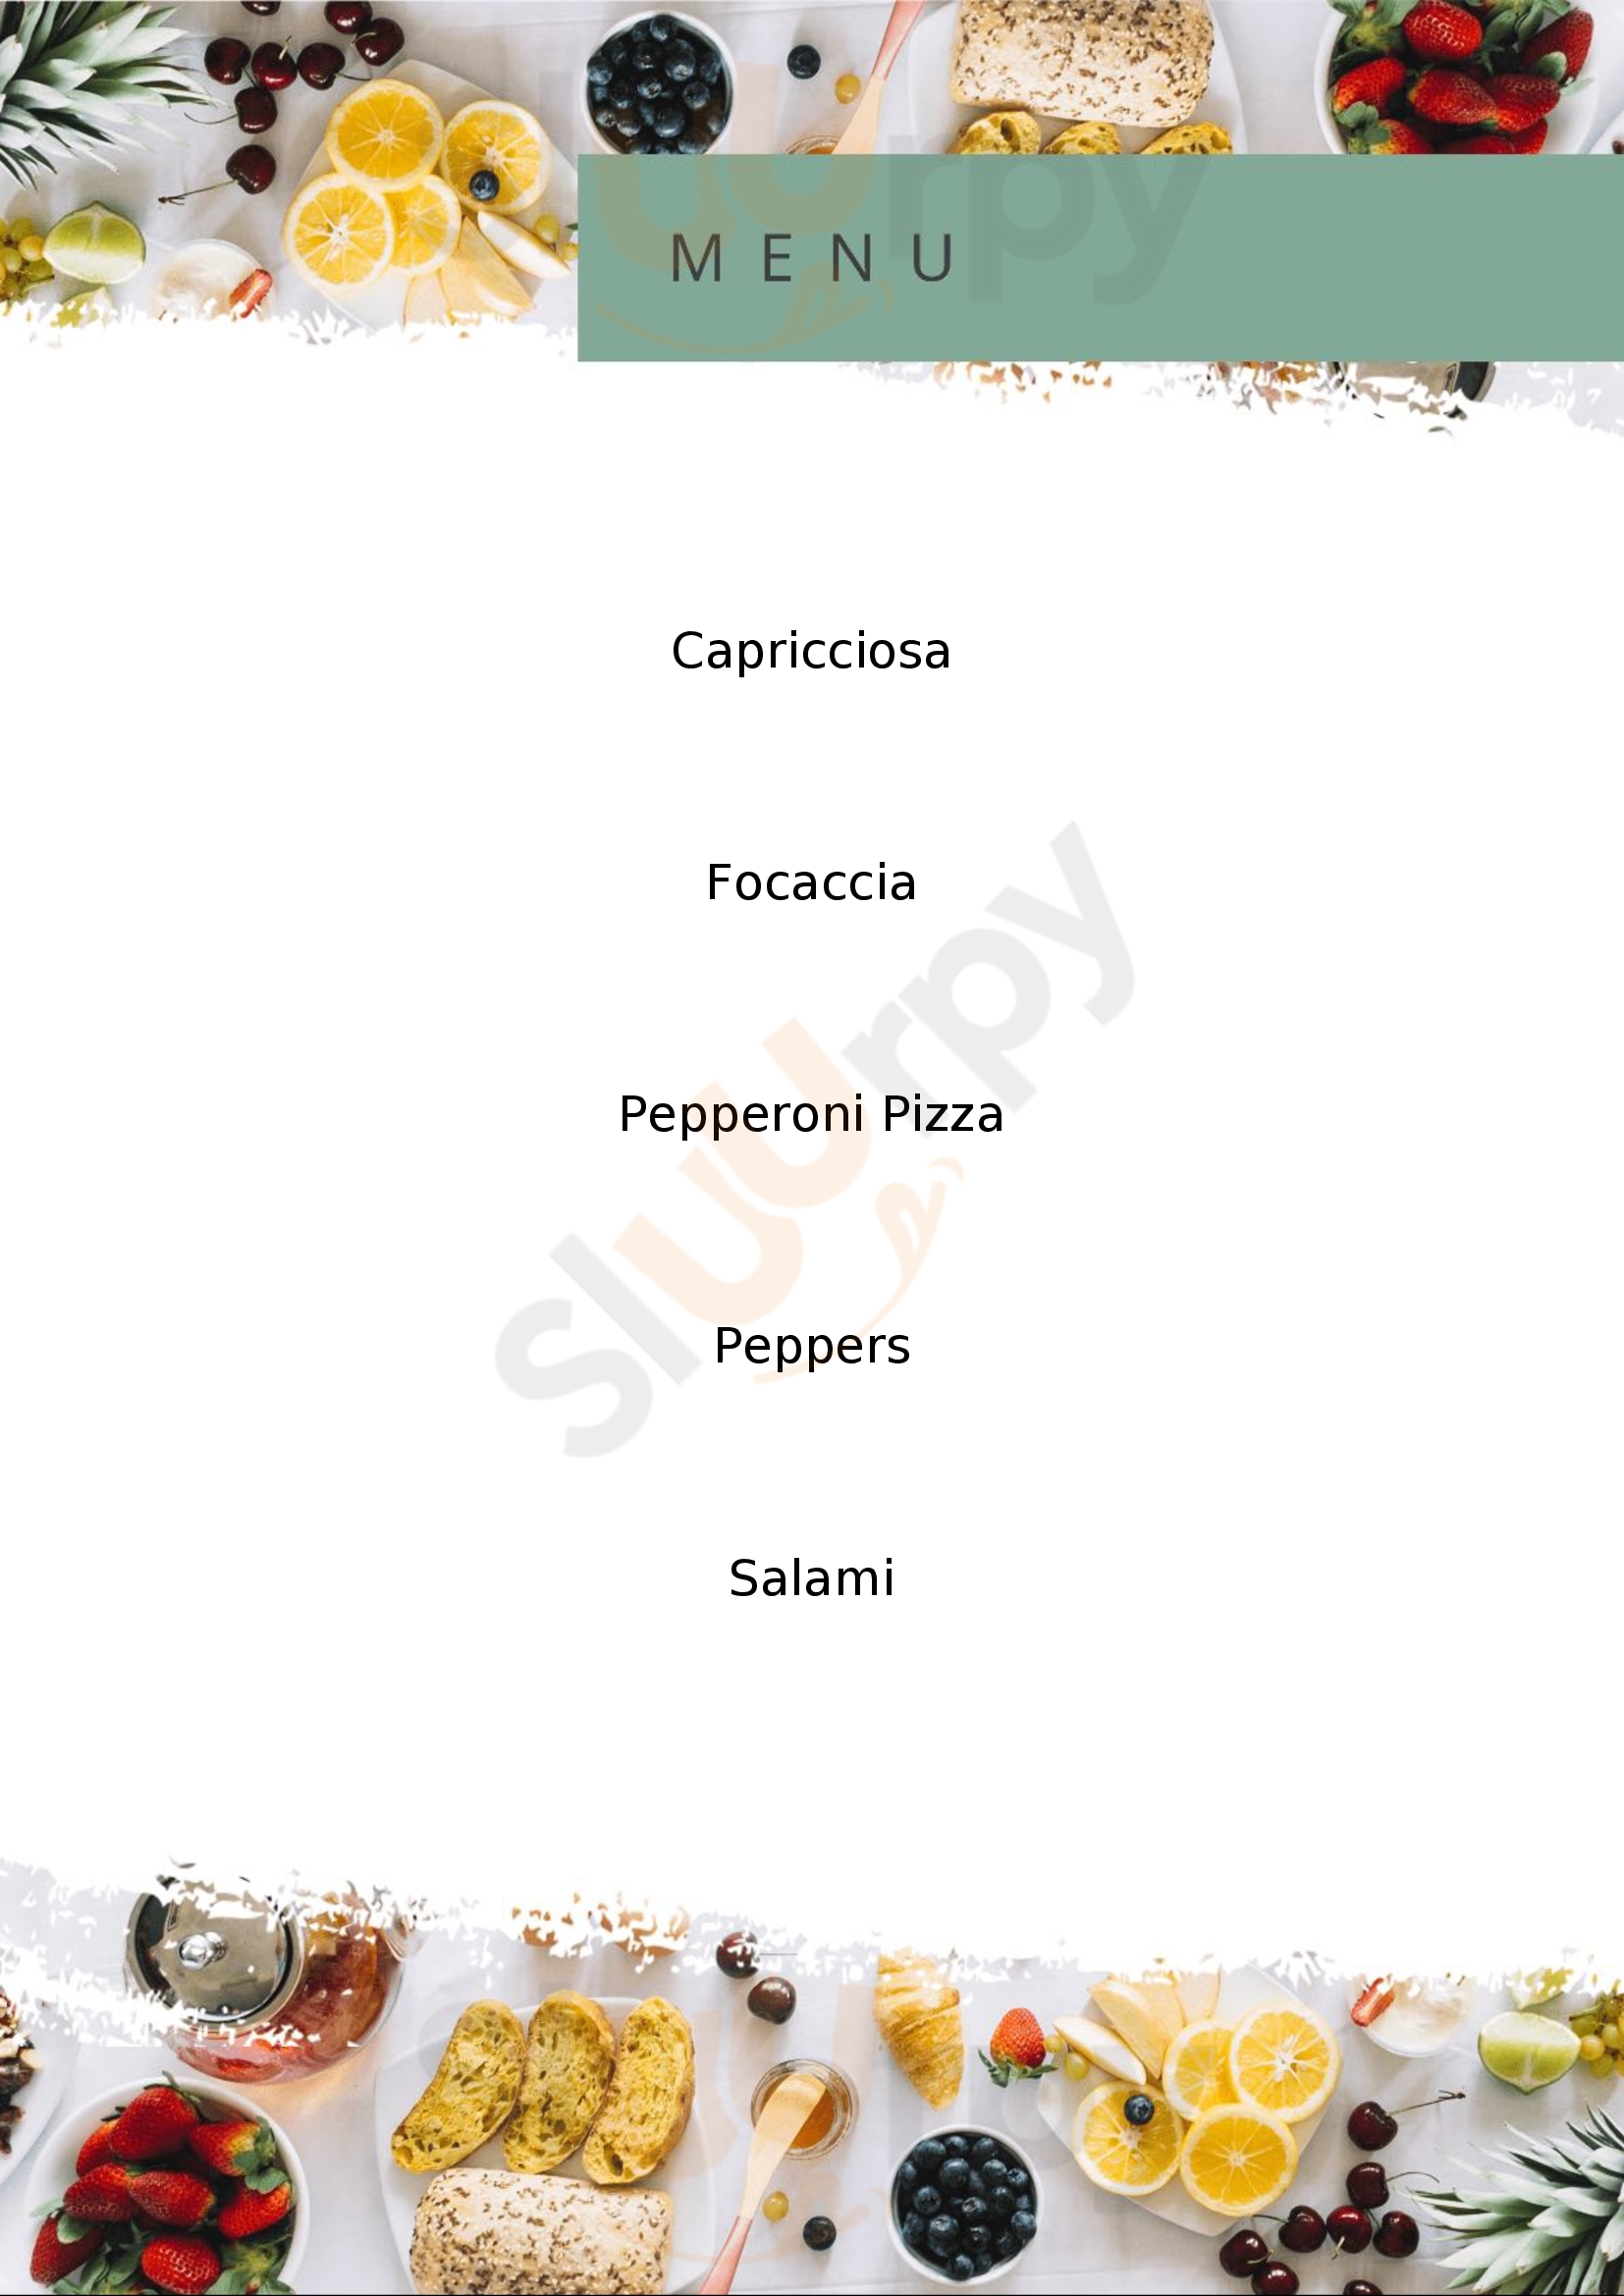 Biga Napoletana Pizzeria Ltd Stowmarket Menu - 1